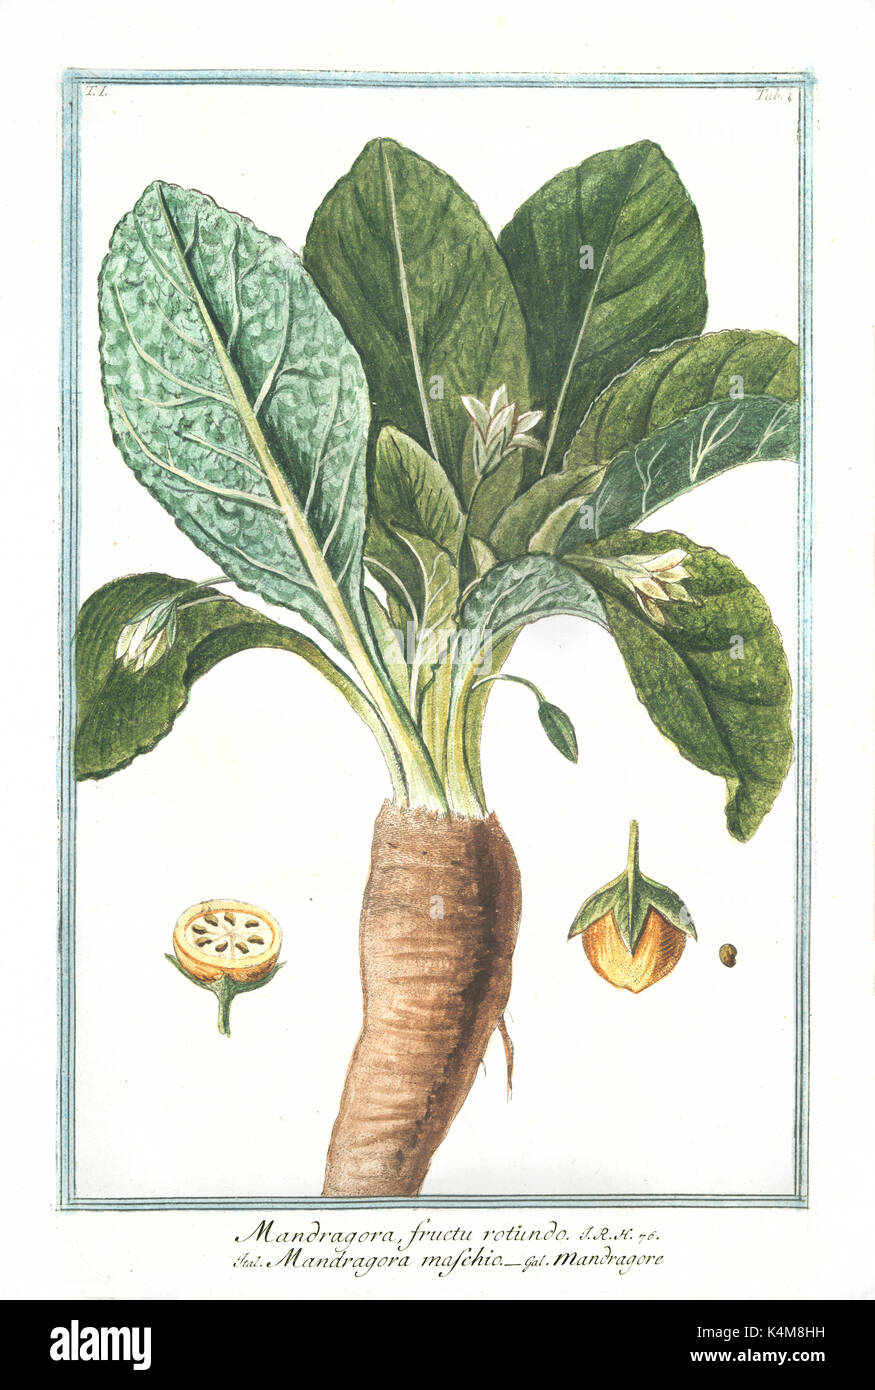 Old illustration of Mandragora fructu rotundo. By G. Bonelli on Hortus Romanus, publ. N. Martelli, Rome, 1772 – 93 Stock Photo